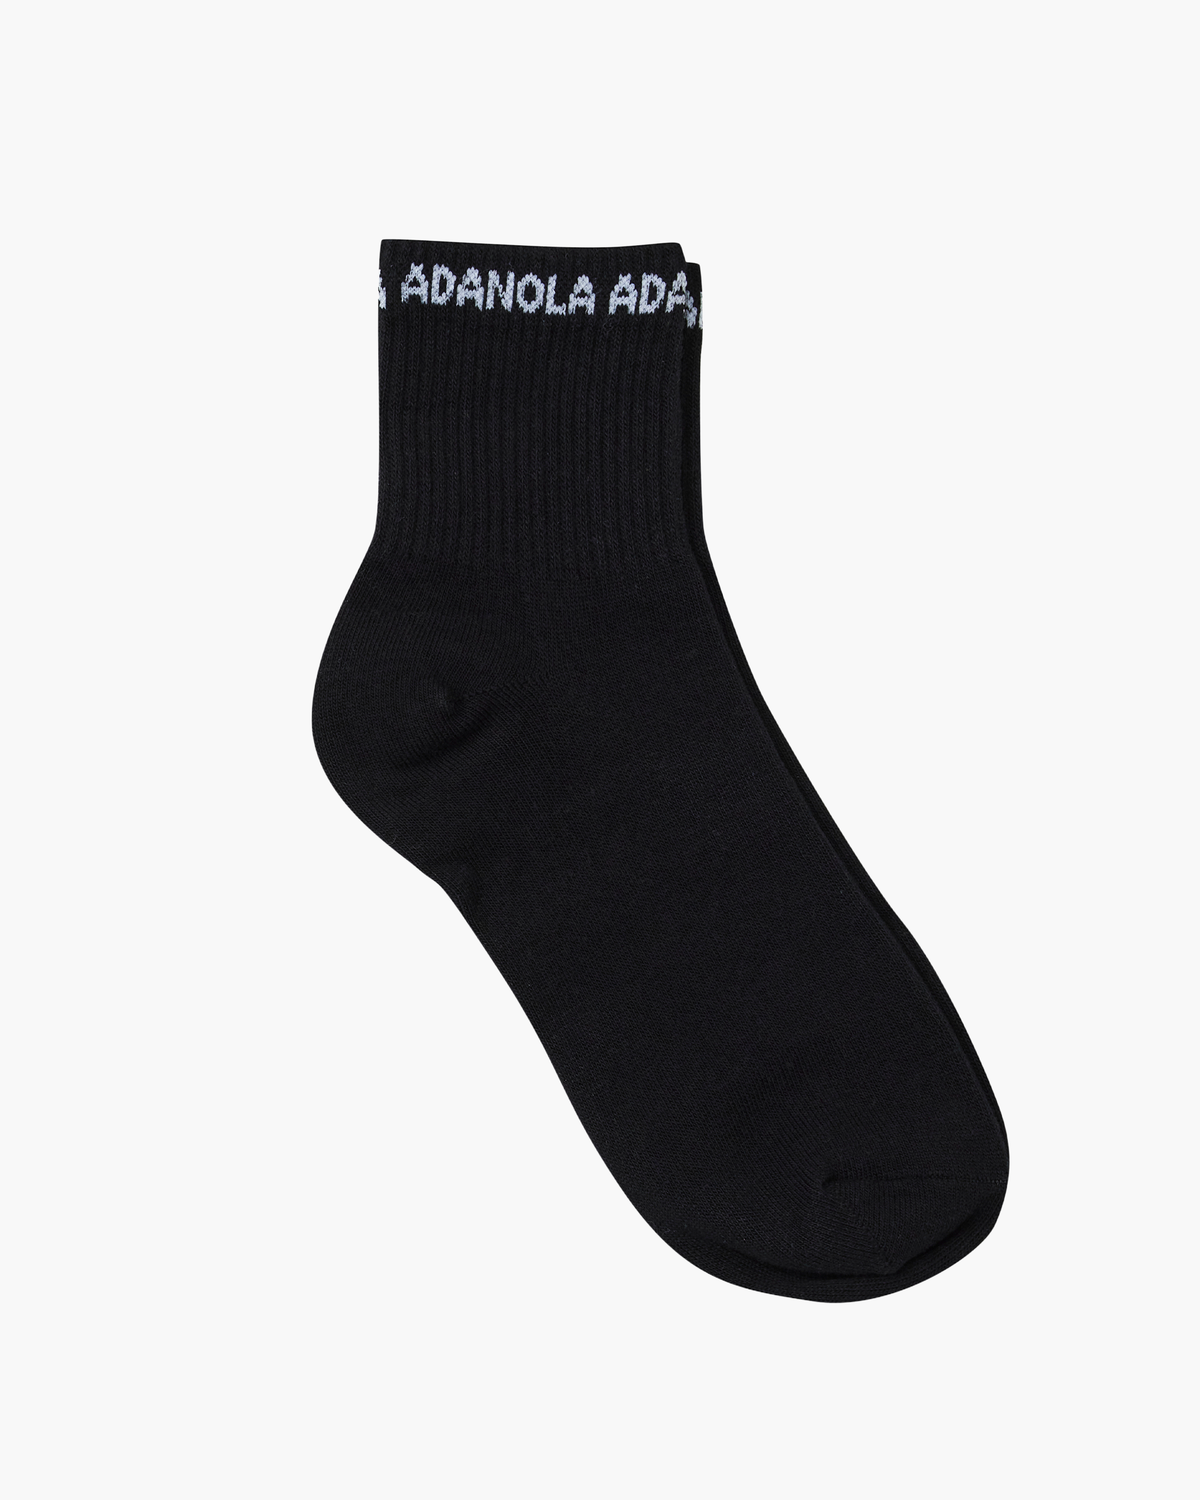 Women's Mid-Length 'Adanola' Socks - Black | Adanola